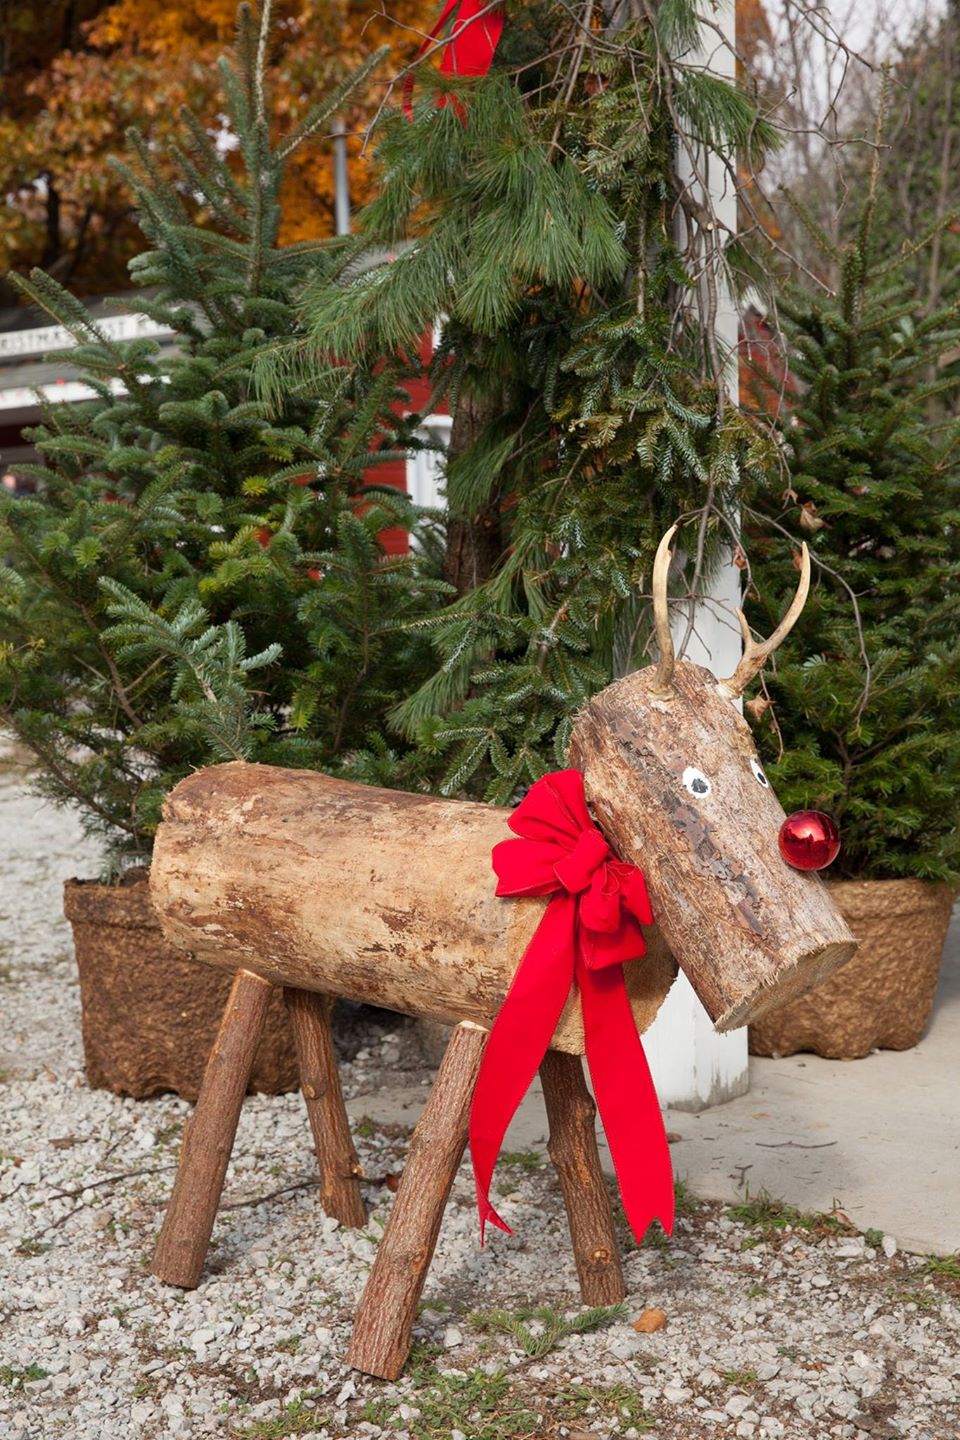 Hand-crafted wooden reindeer